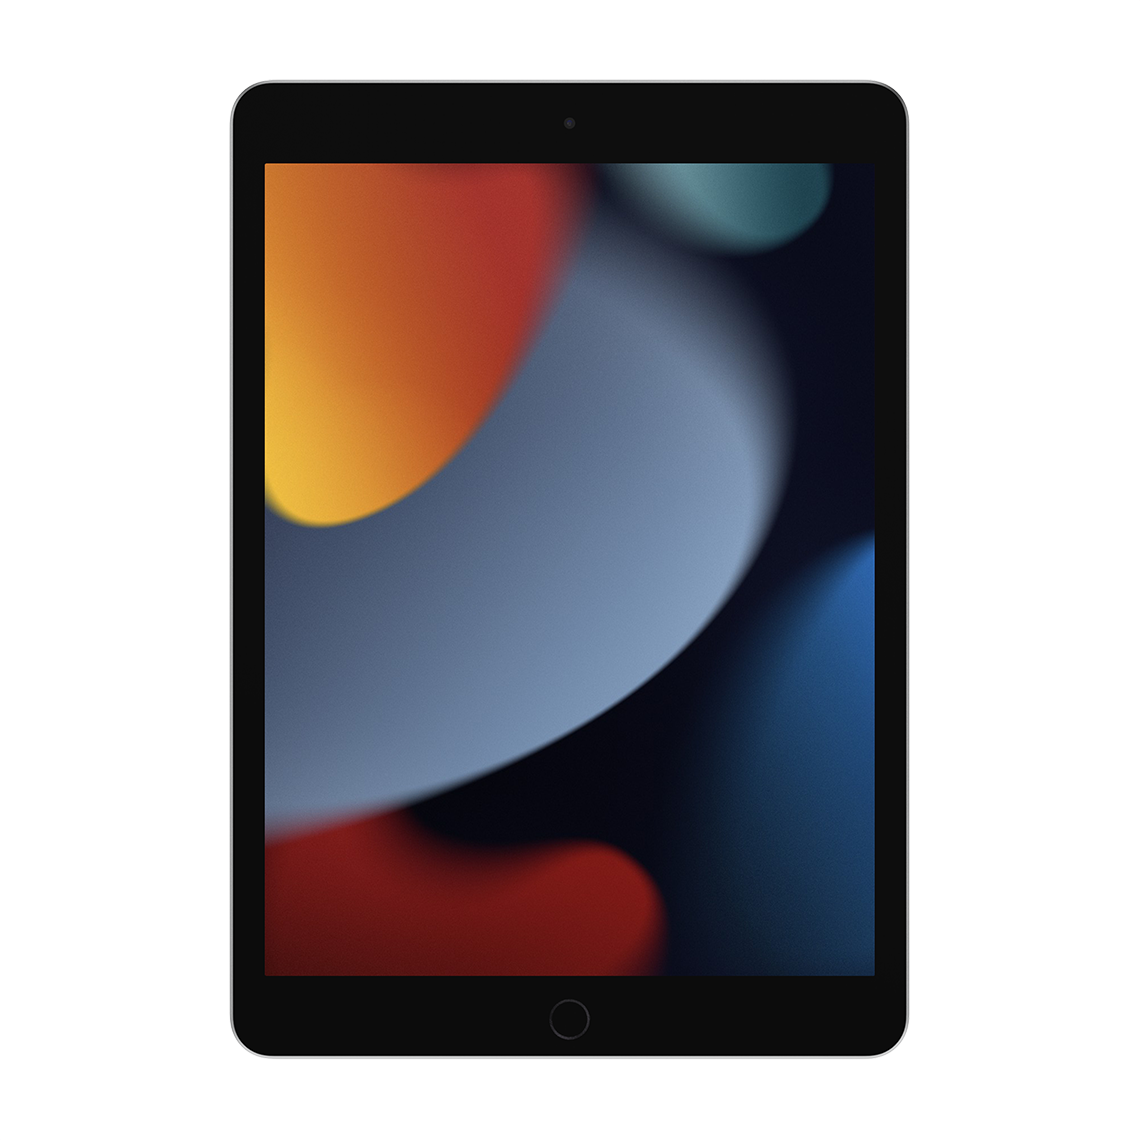 Apple iPad .2 inch 9th Generation   Silver   GB, Wi Fi, Open